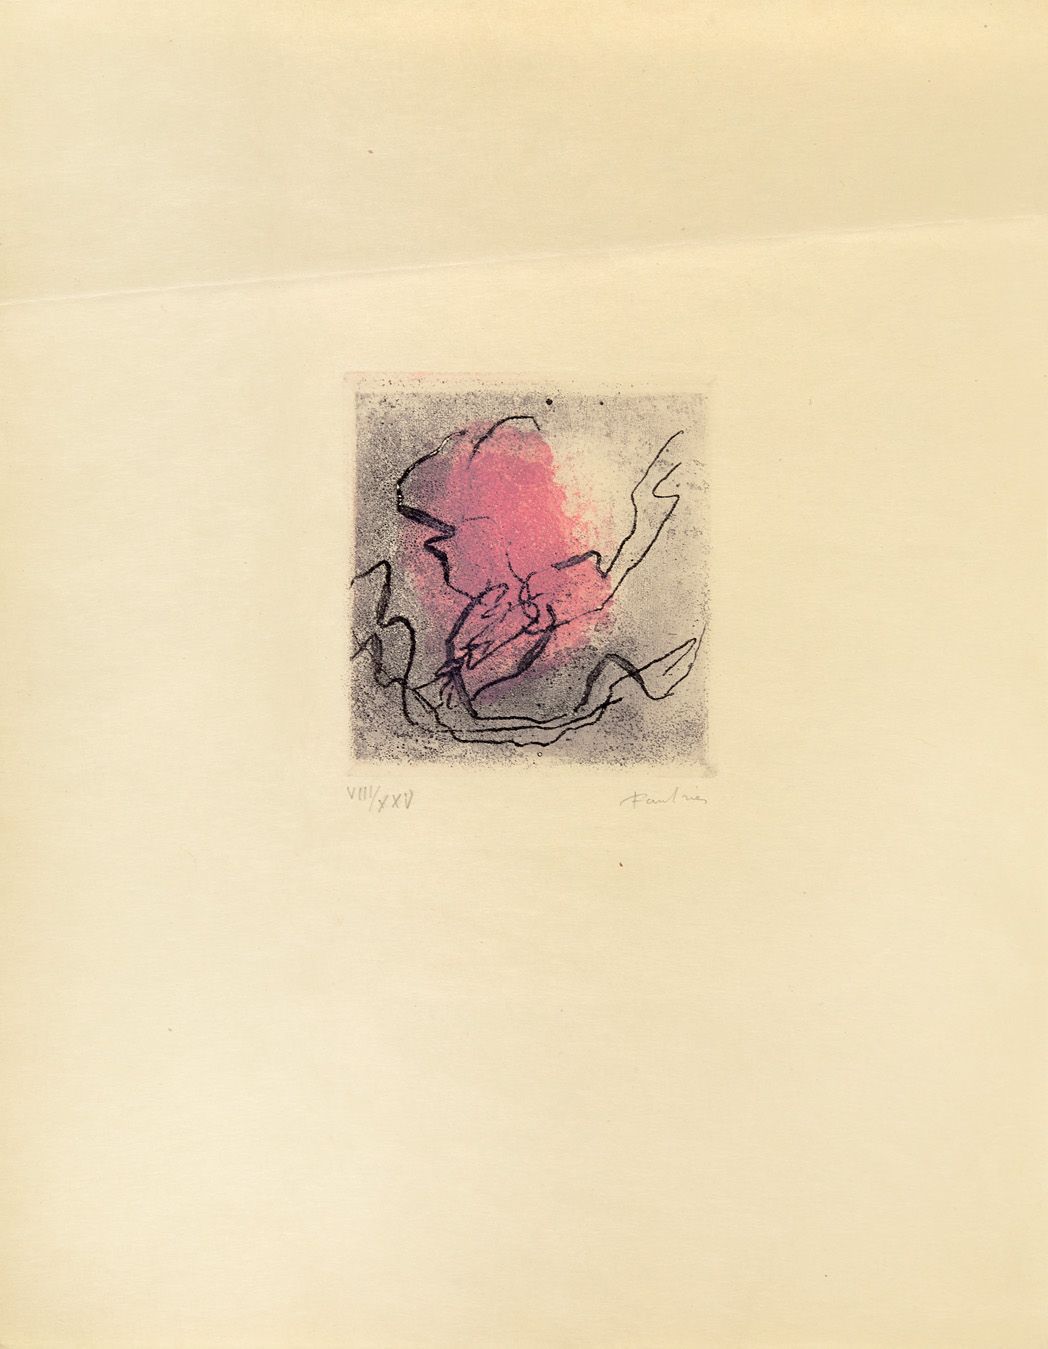 Jean FAUTRIER 让-福里埃 (1898 - 1964)

普罗旺斯的景观

日本彩色蚀刻和水印，右下角署名 "VIII/XXV"。

高9,2 - &hellip;